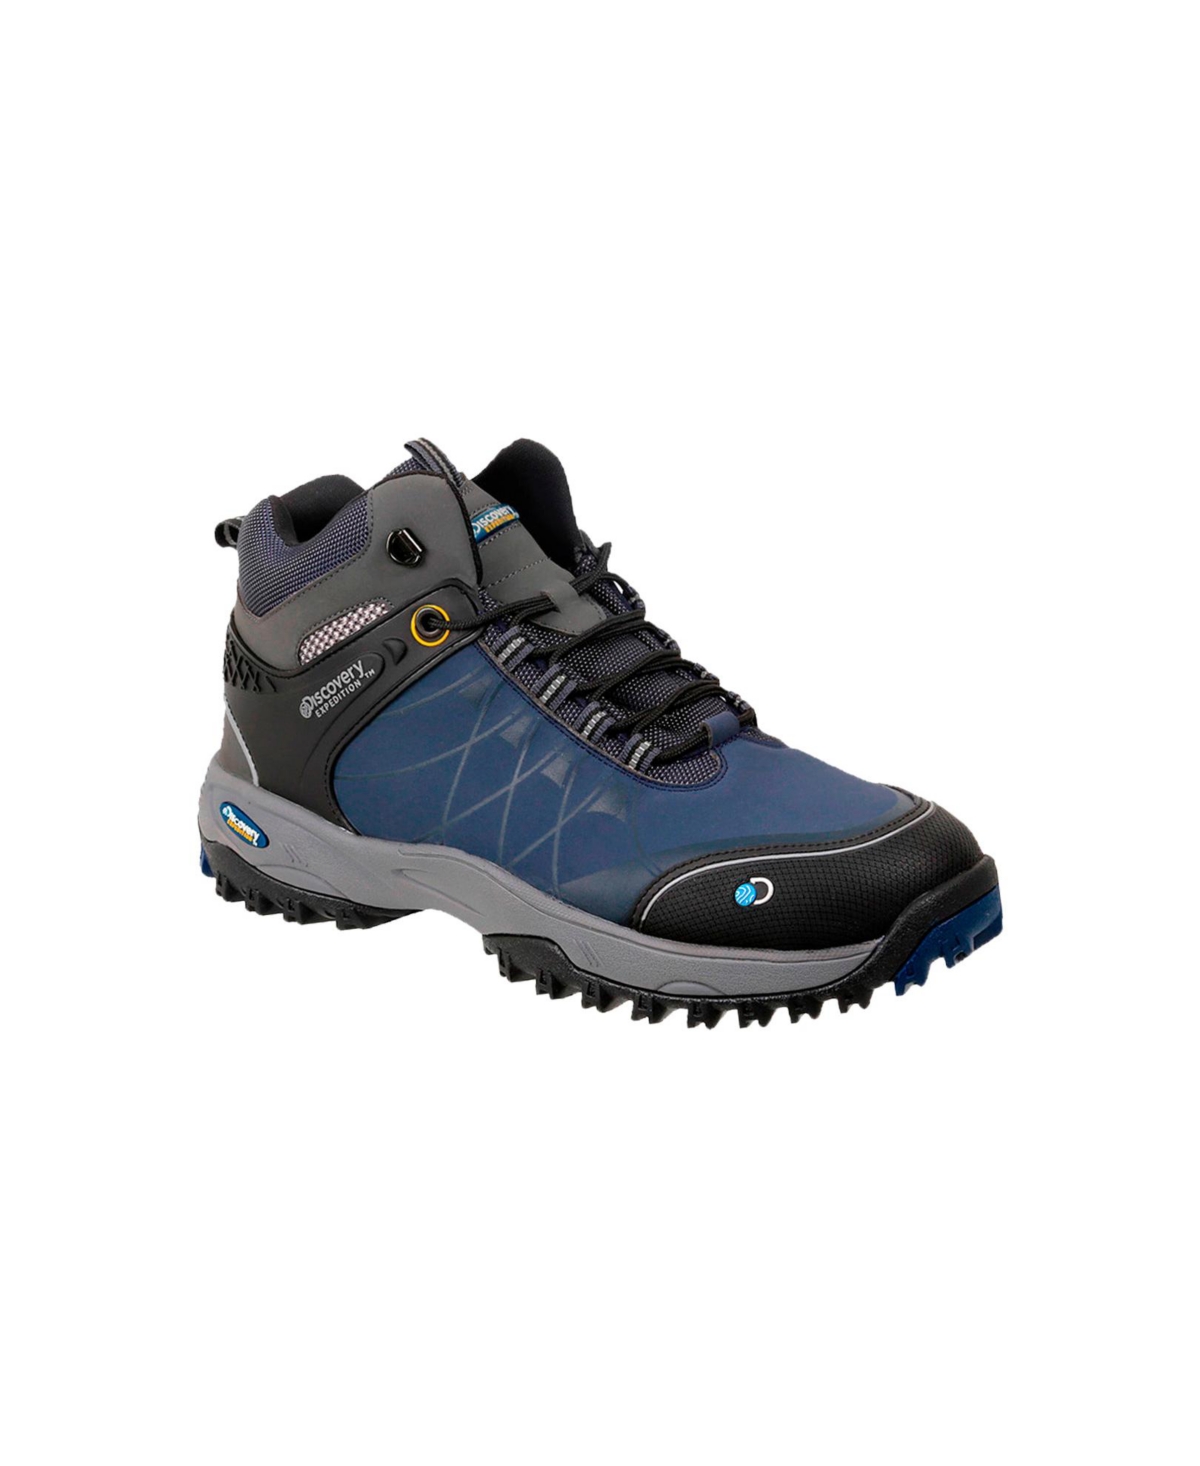 Men's Hiking Boot Banff Blue 2080 - Blue